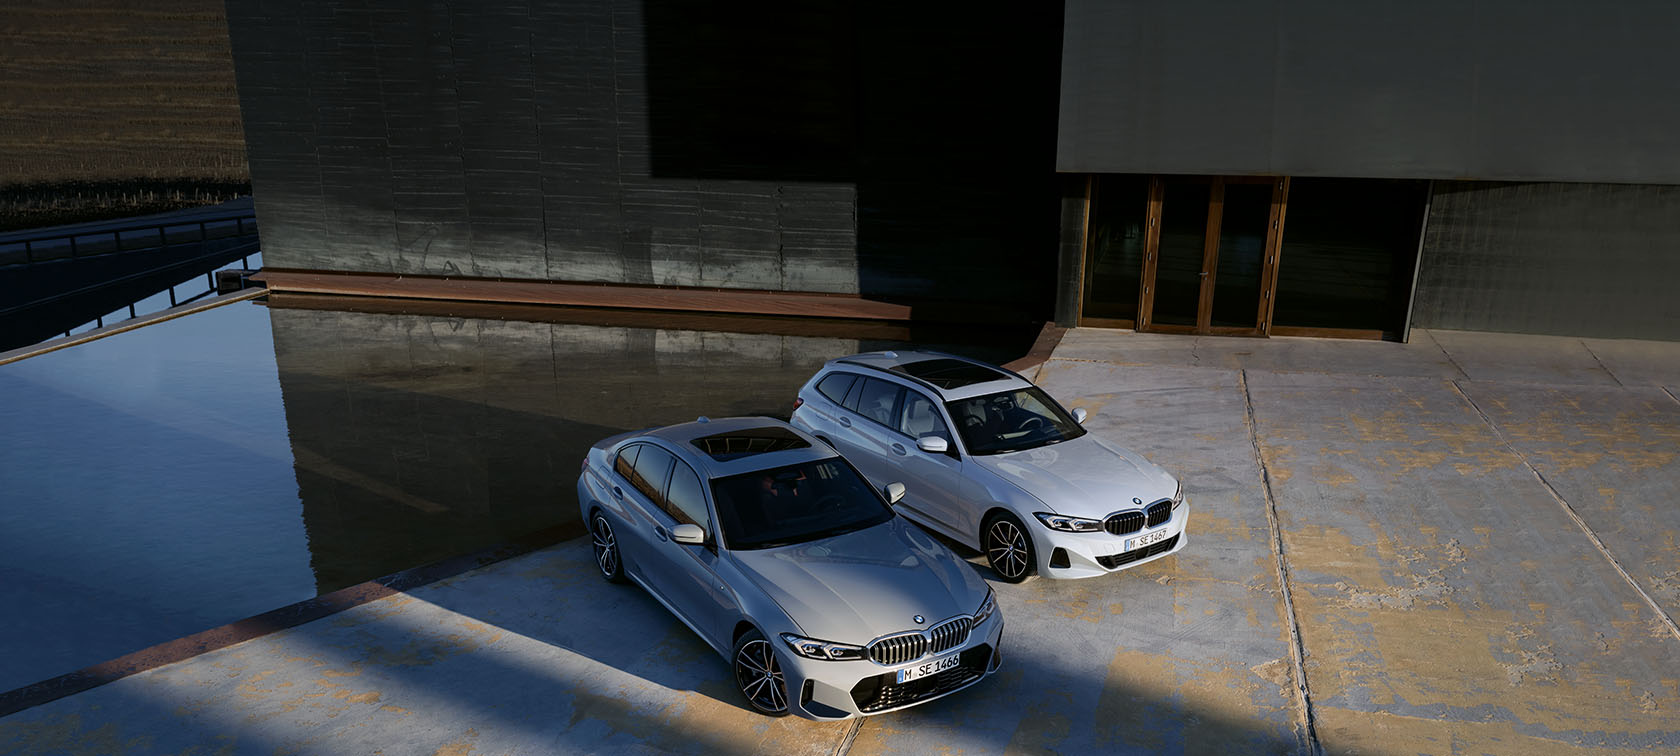 BMW Autohaus ➤ Klaus Scheller GmbH - BMW Fahrzeuge & Services